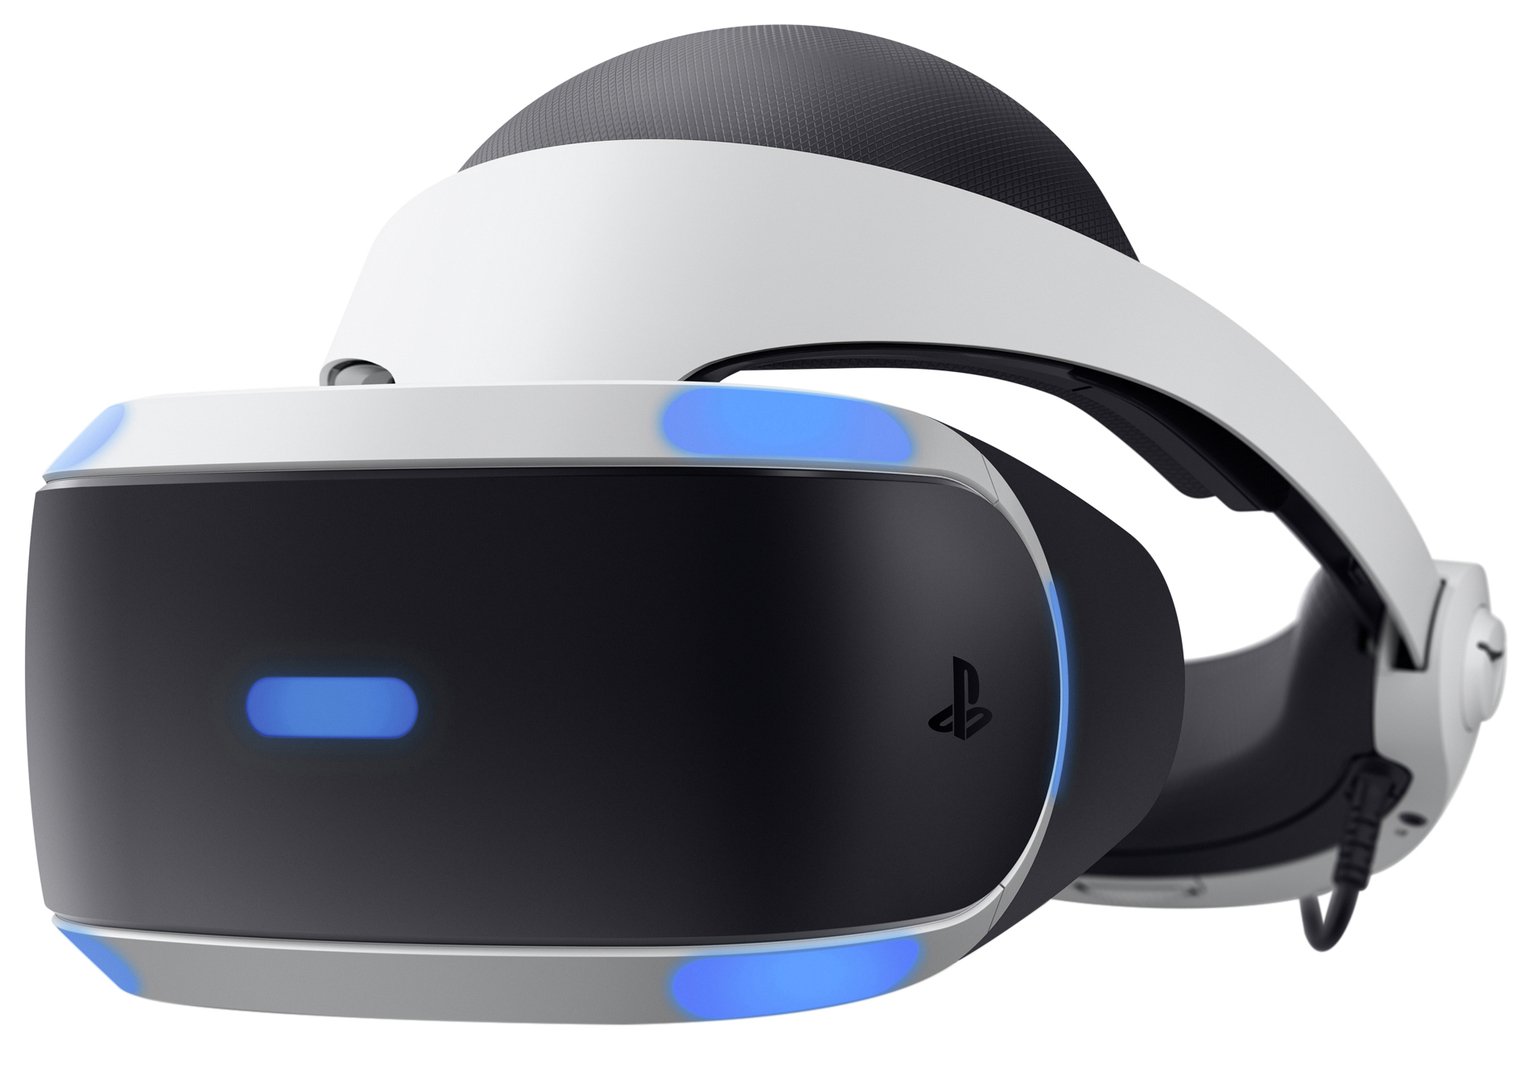 PlayStation VR Megapack 2019 Review